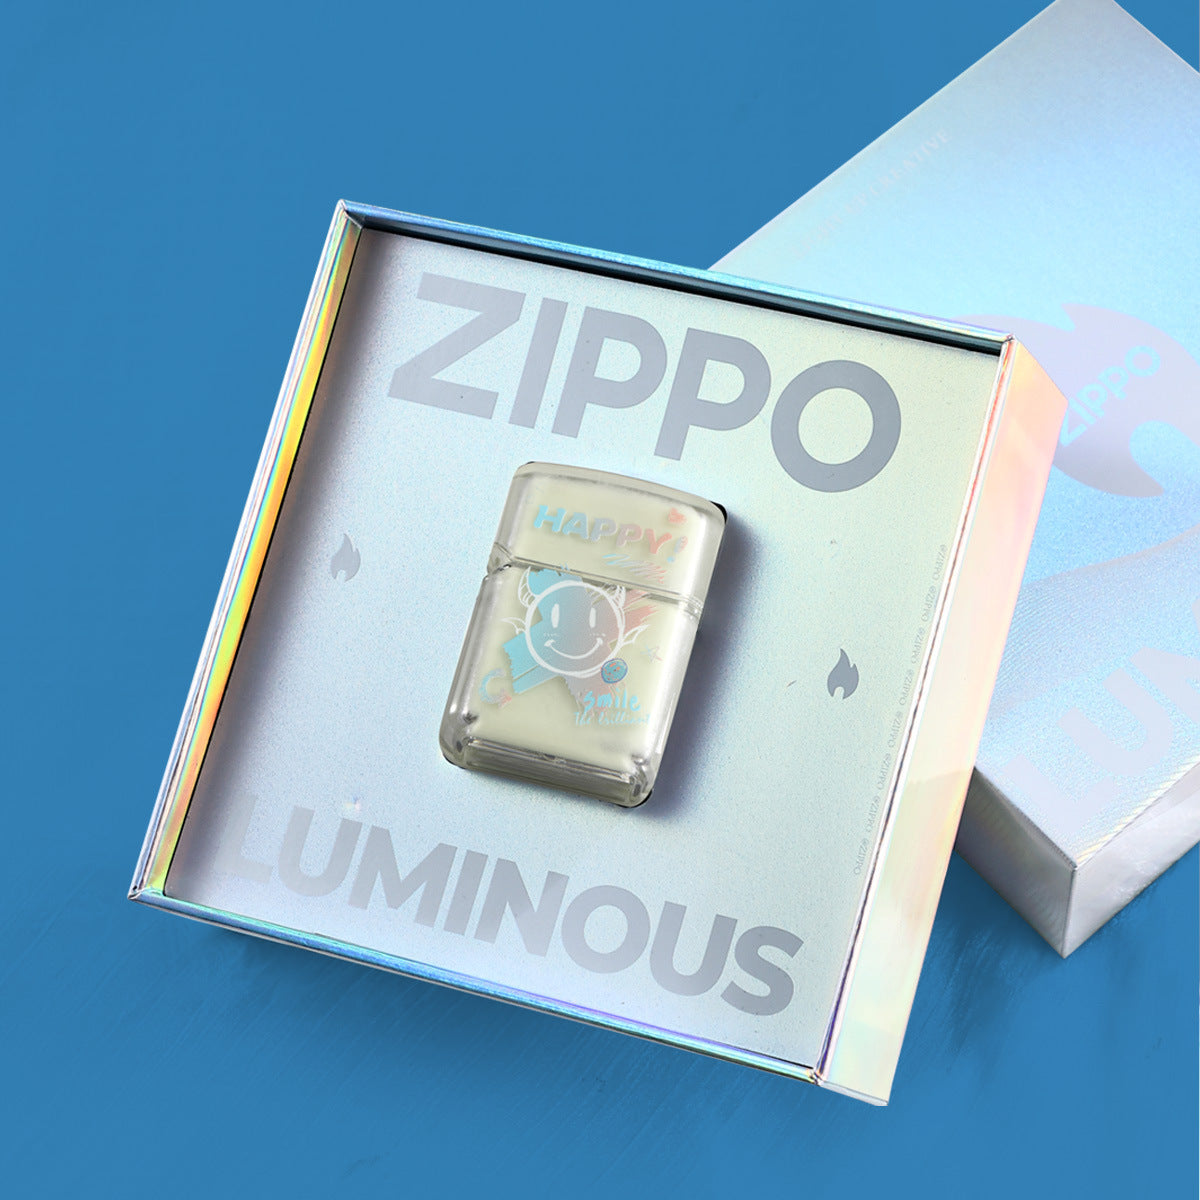 zippo Glow-in-the-dark quicksand lighter